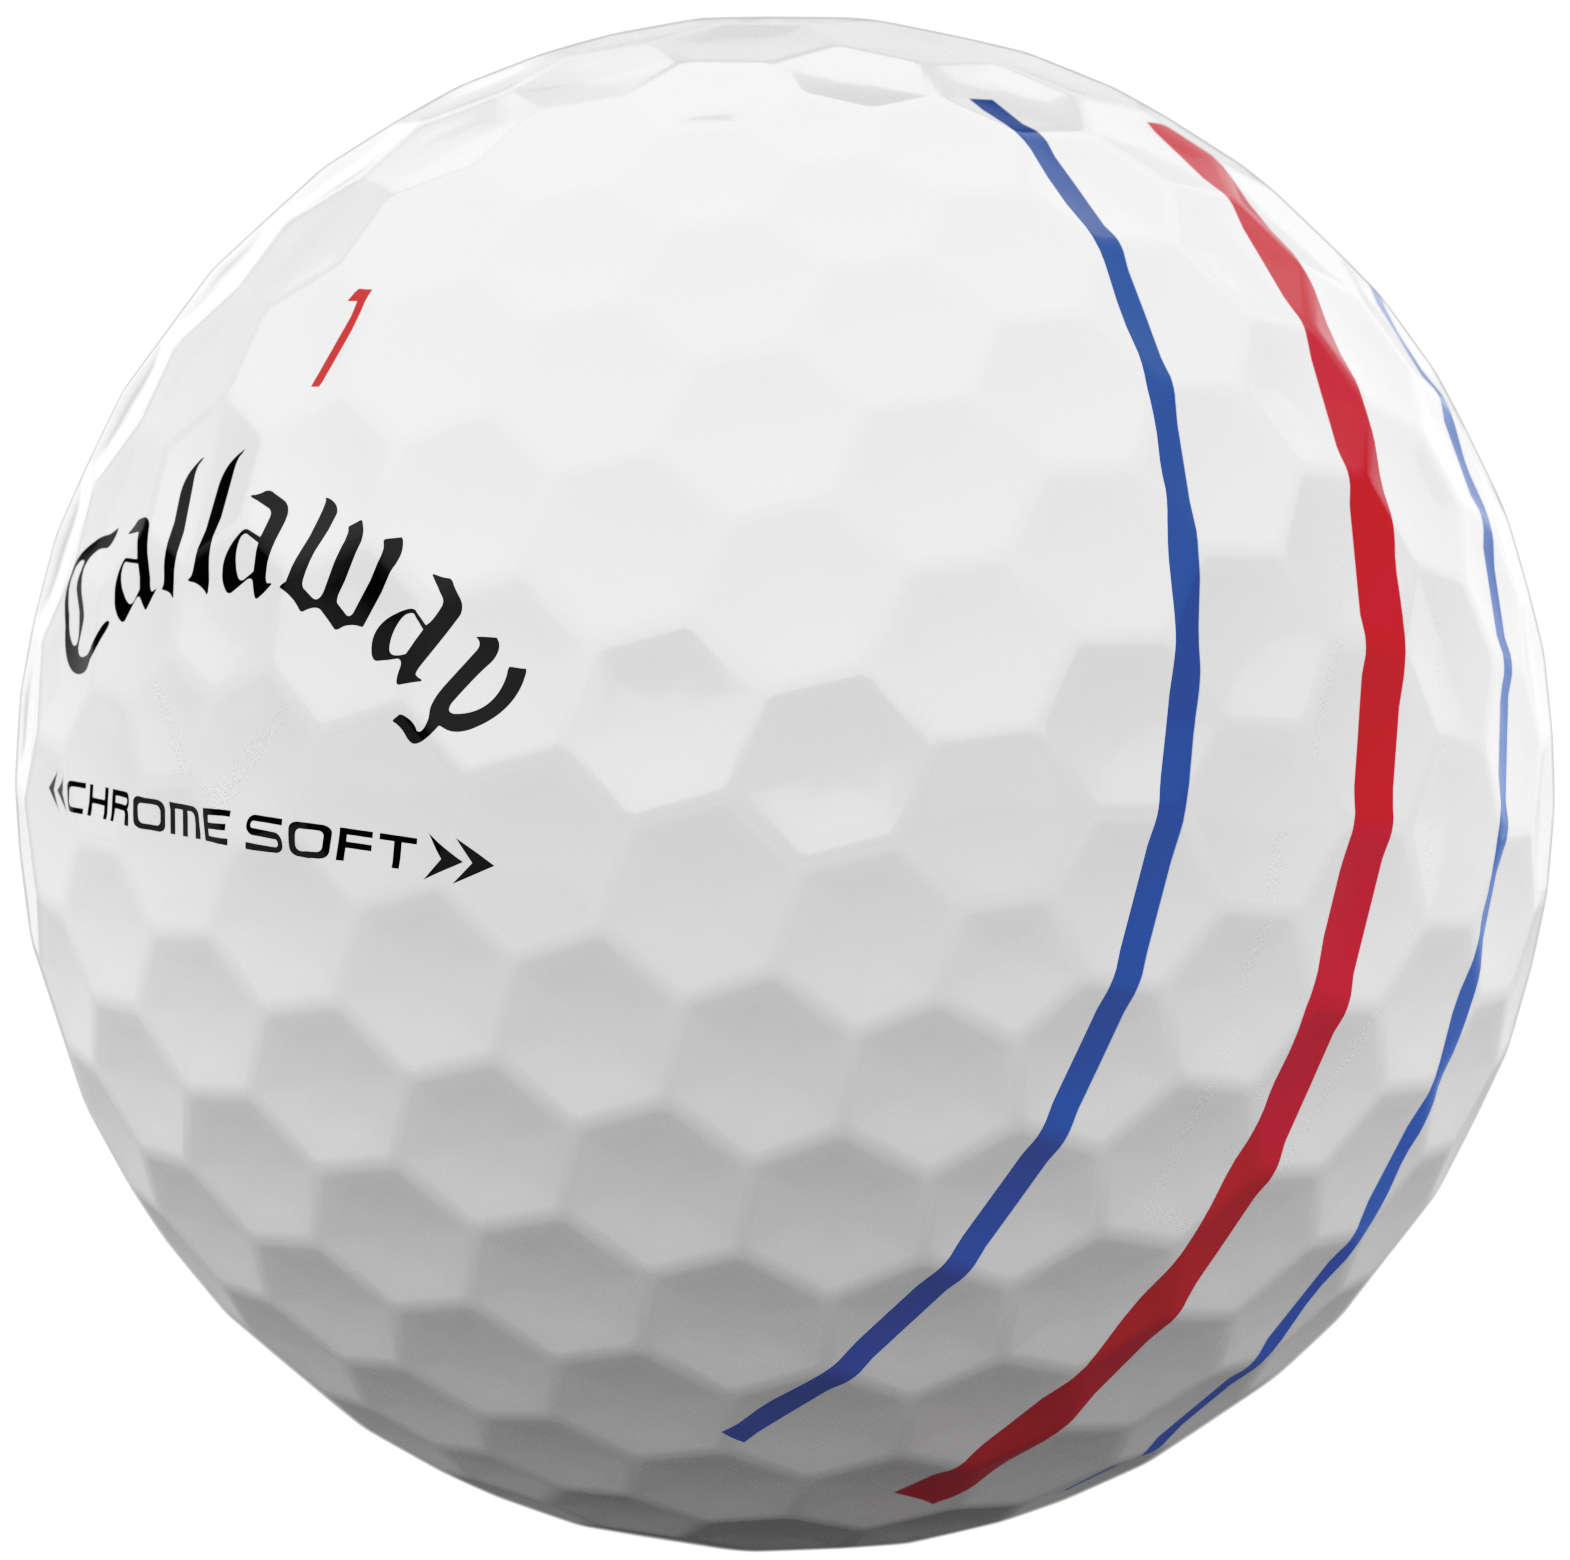 Callaway Chrome Soft Triple Track Technology Golfbälle, white